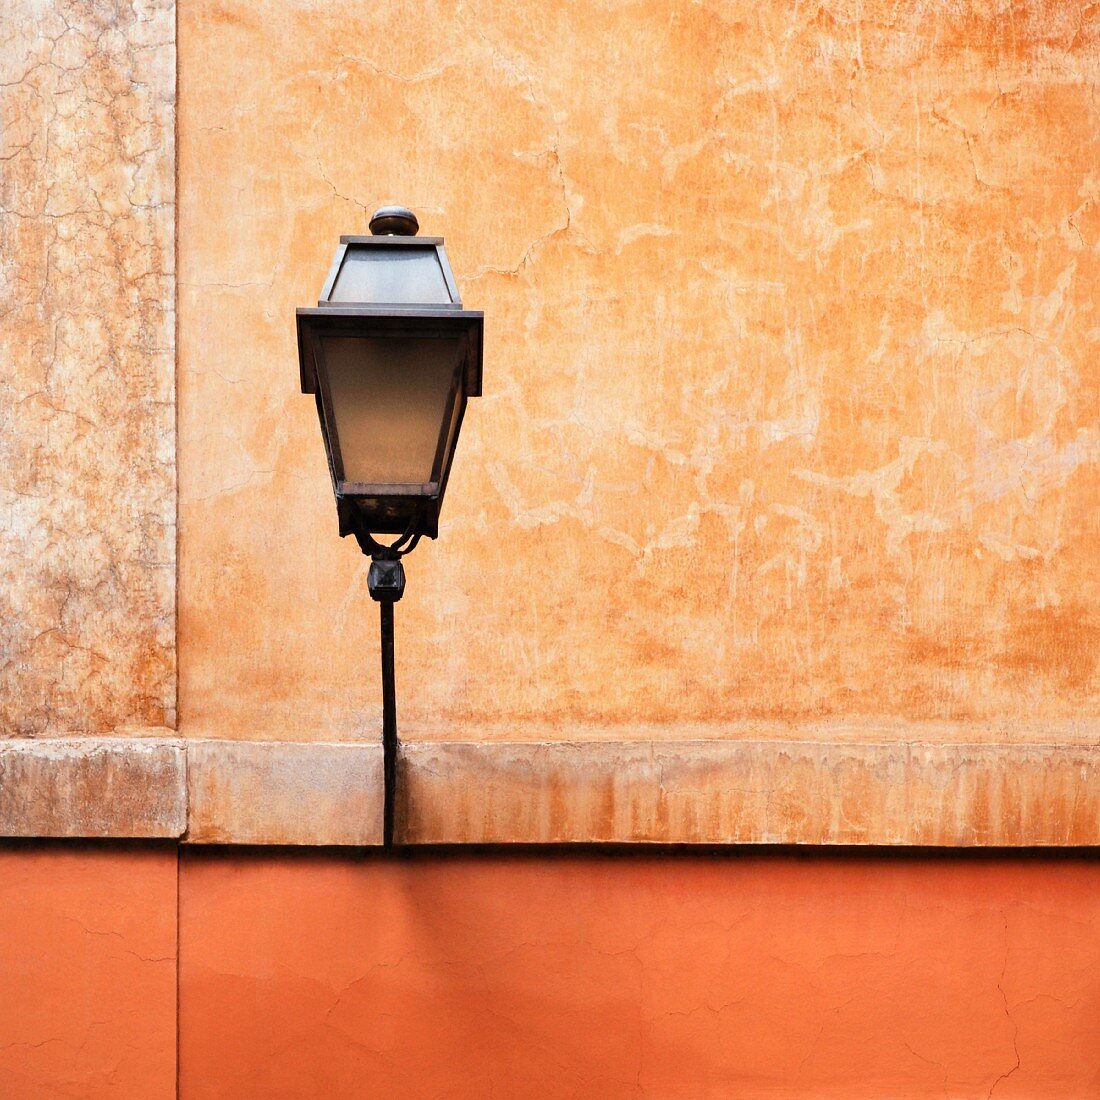 Street lamp on a building facade (Italy)